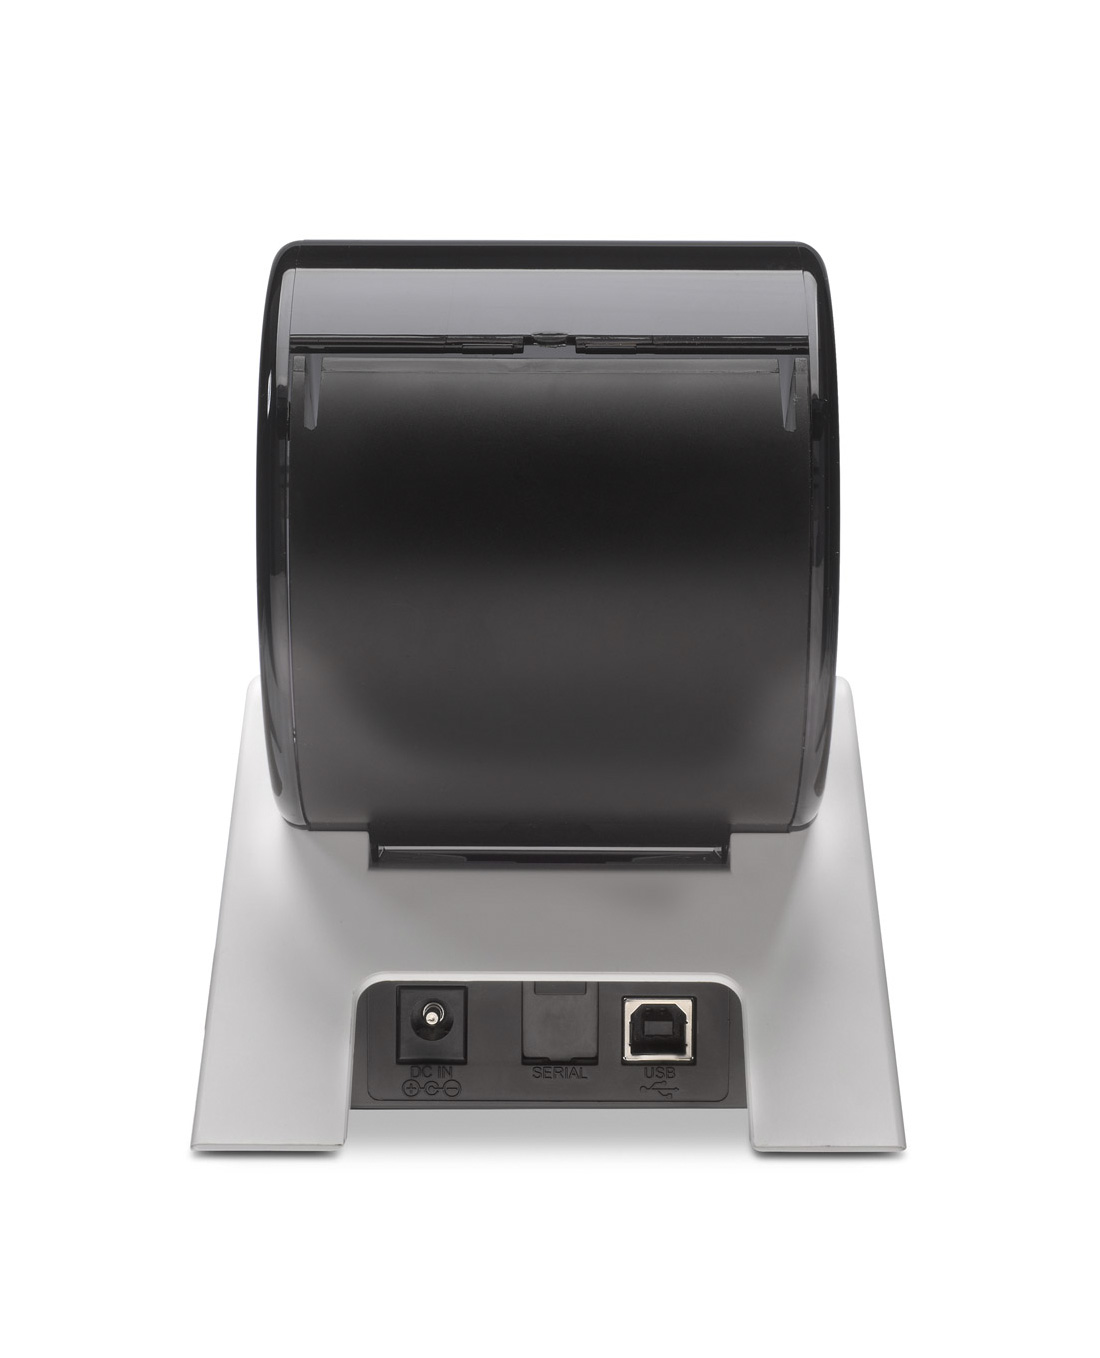 SLP 620 - Smart Label Printers | Seiko Instruments USA